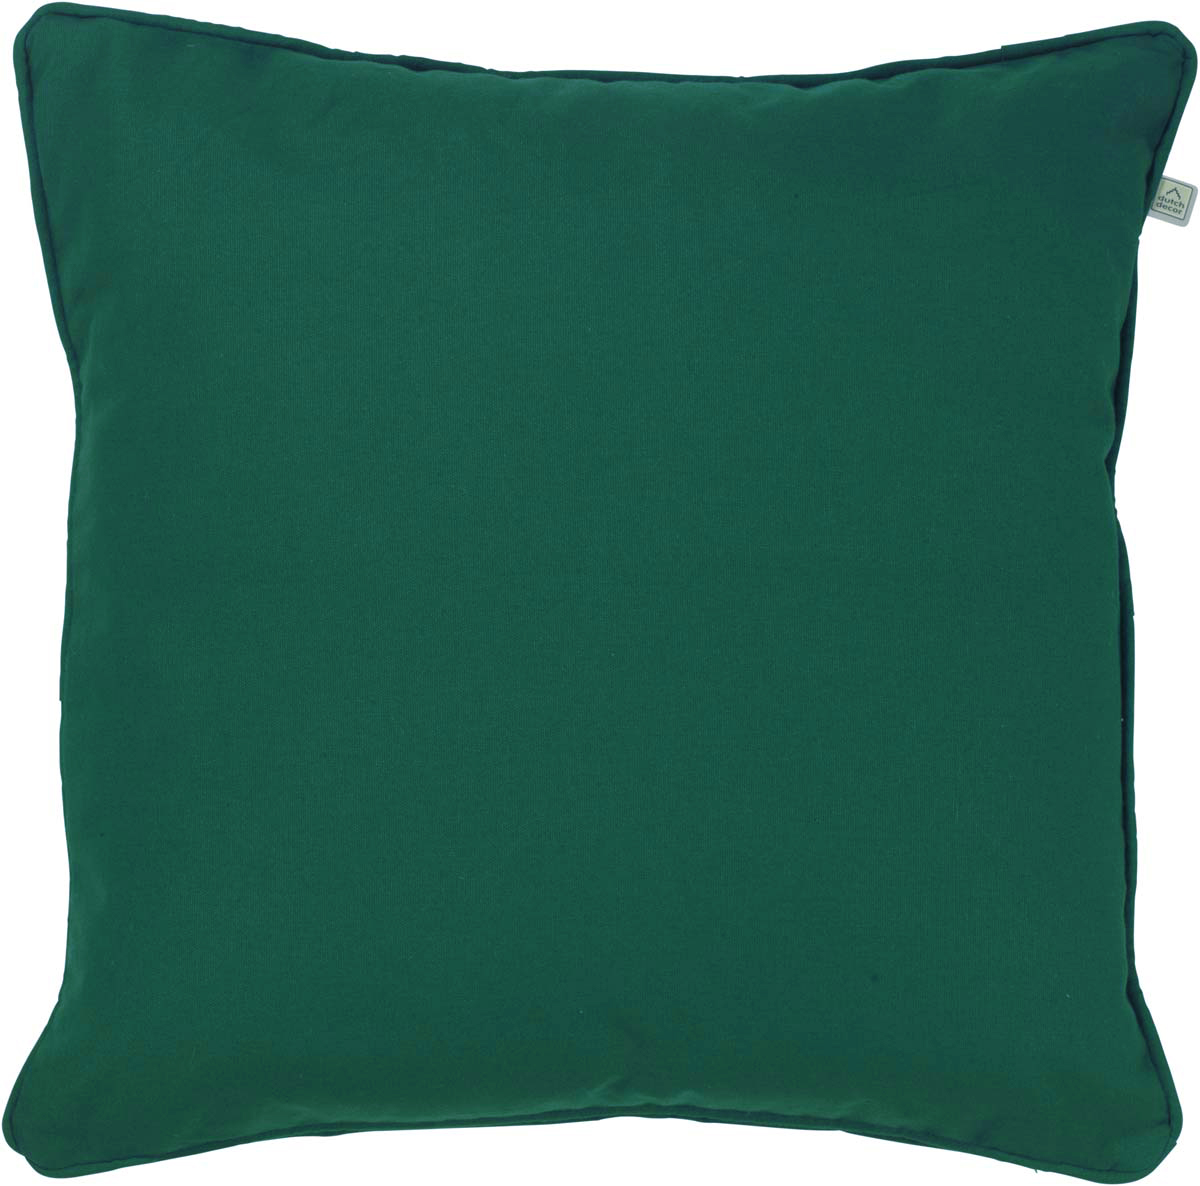 JAVA - Sierkussen XL - katoen - 70x70 cm - smaragd groen - lounge kussen